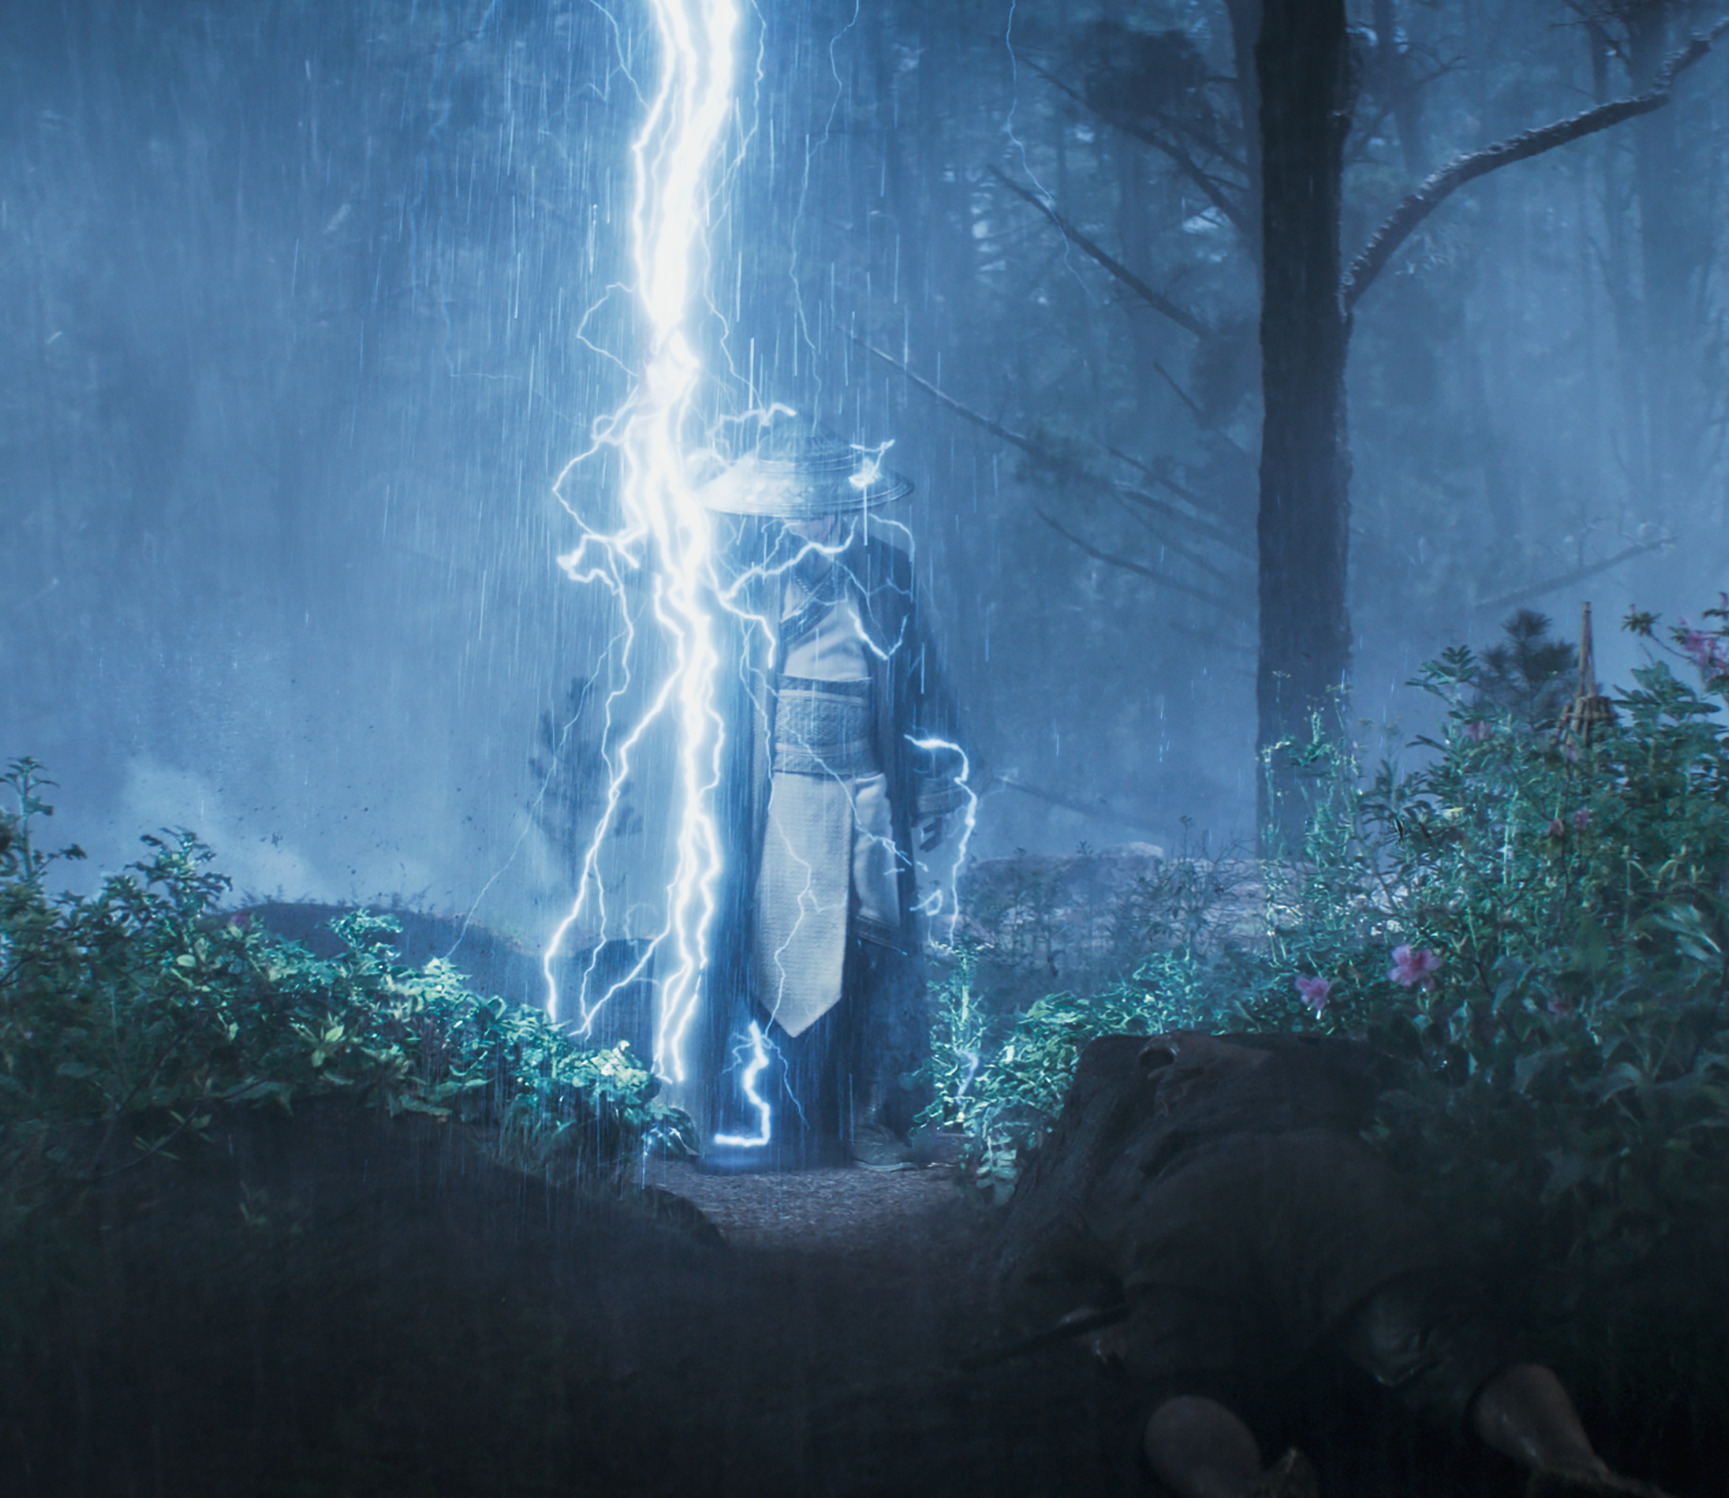 Review: Mortal Kombat's reboot lacks substance – The Prospector